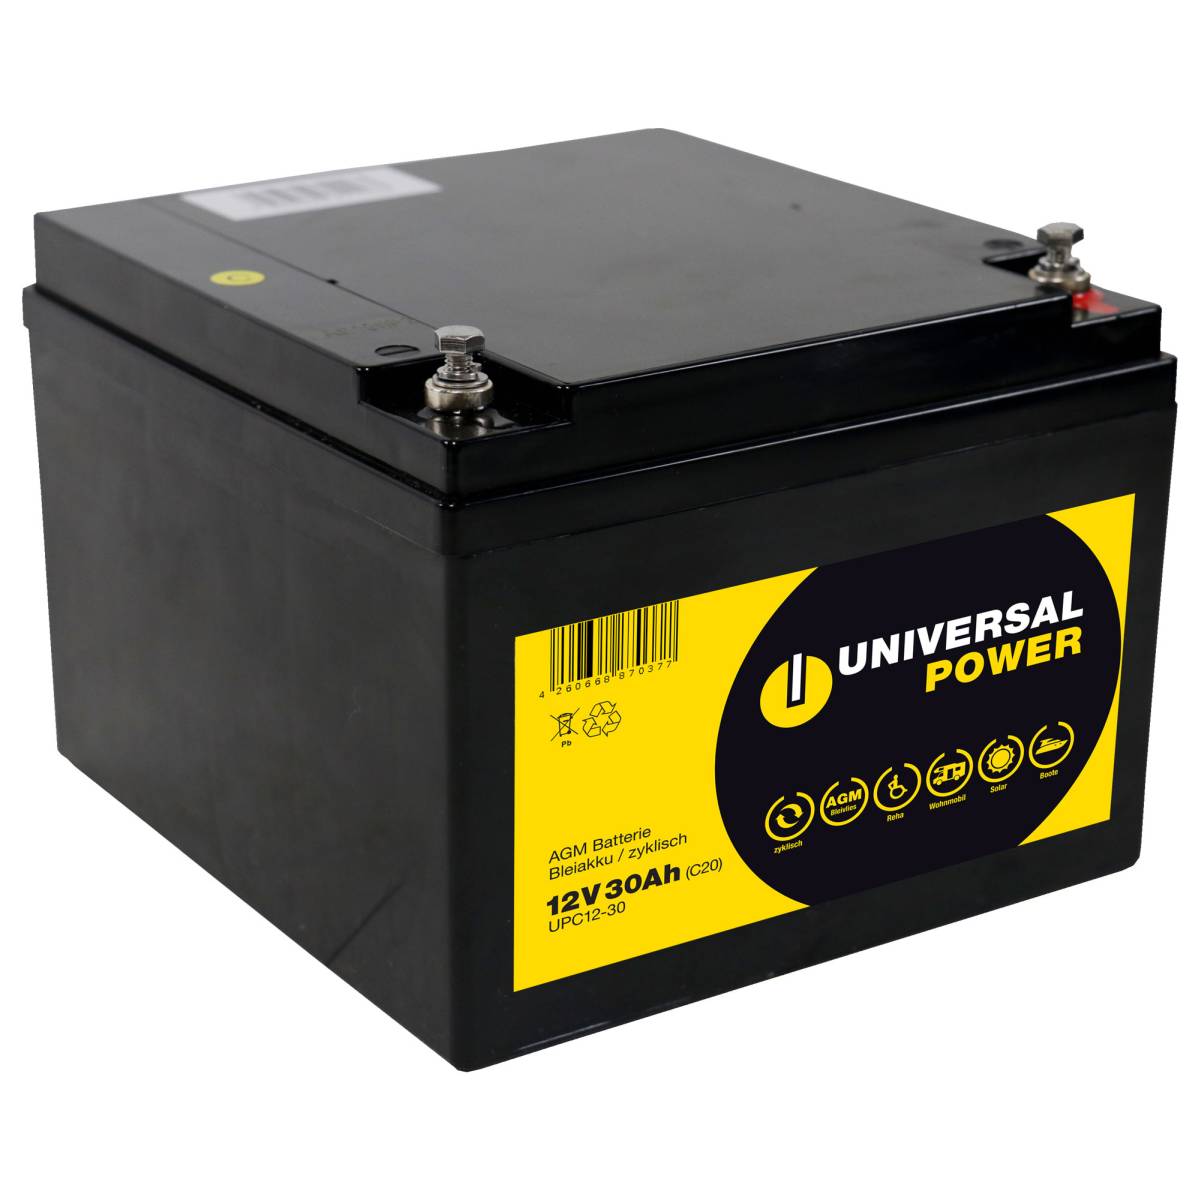 Universal Power AGM UPC12-30 12V 30Ah (C20) batteria AGM resistente al ciclo senza manutenzione